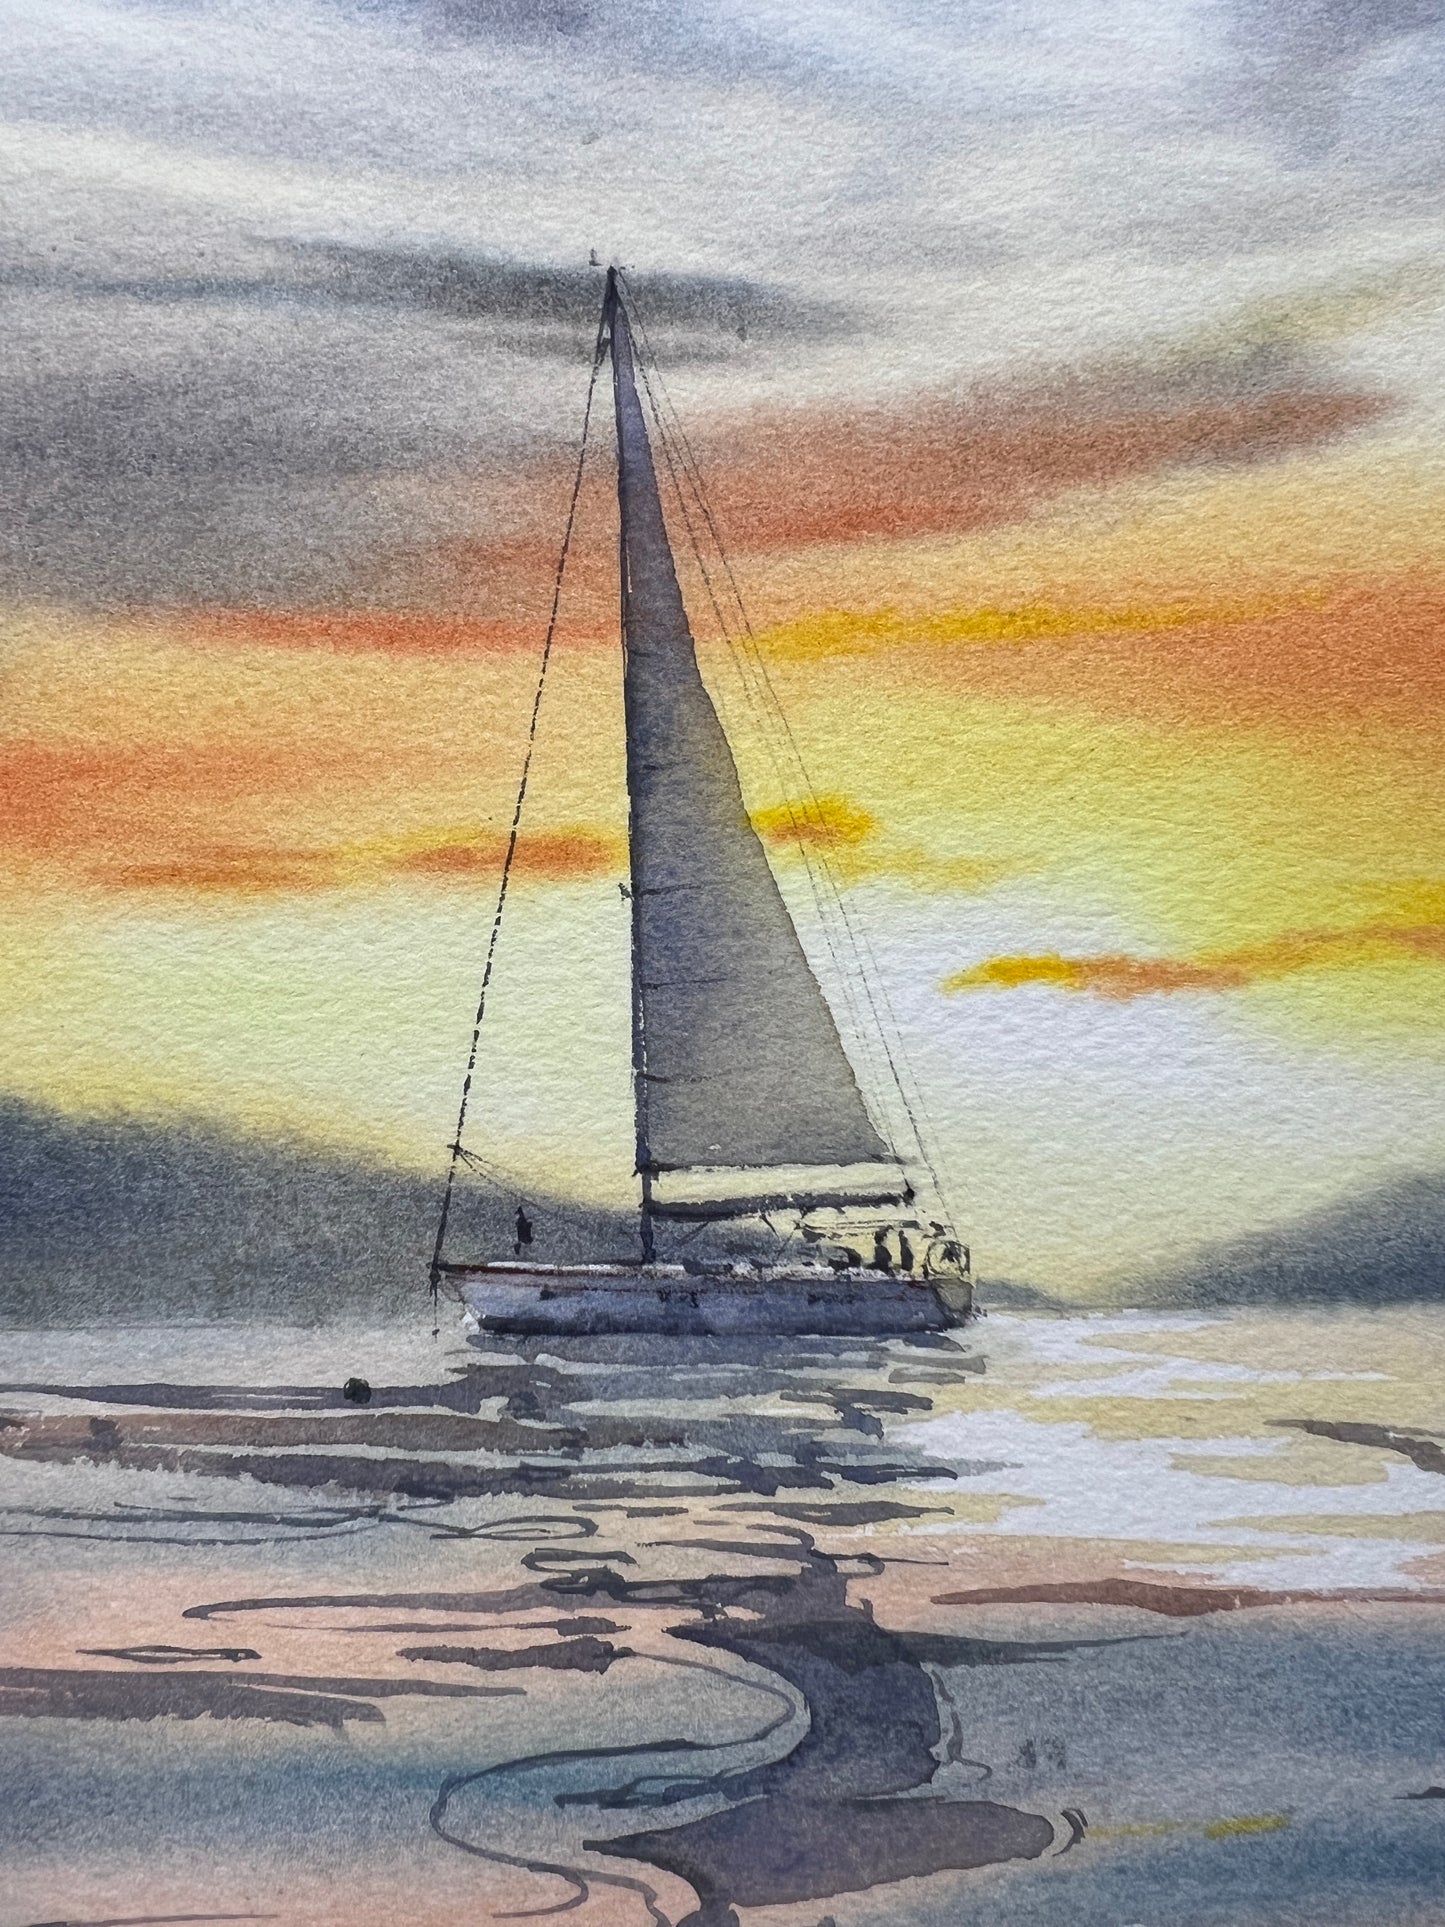 Seascape Painting Original Watercolor, Sailboat Coast Art - Yacht at sunset #15